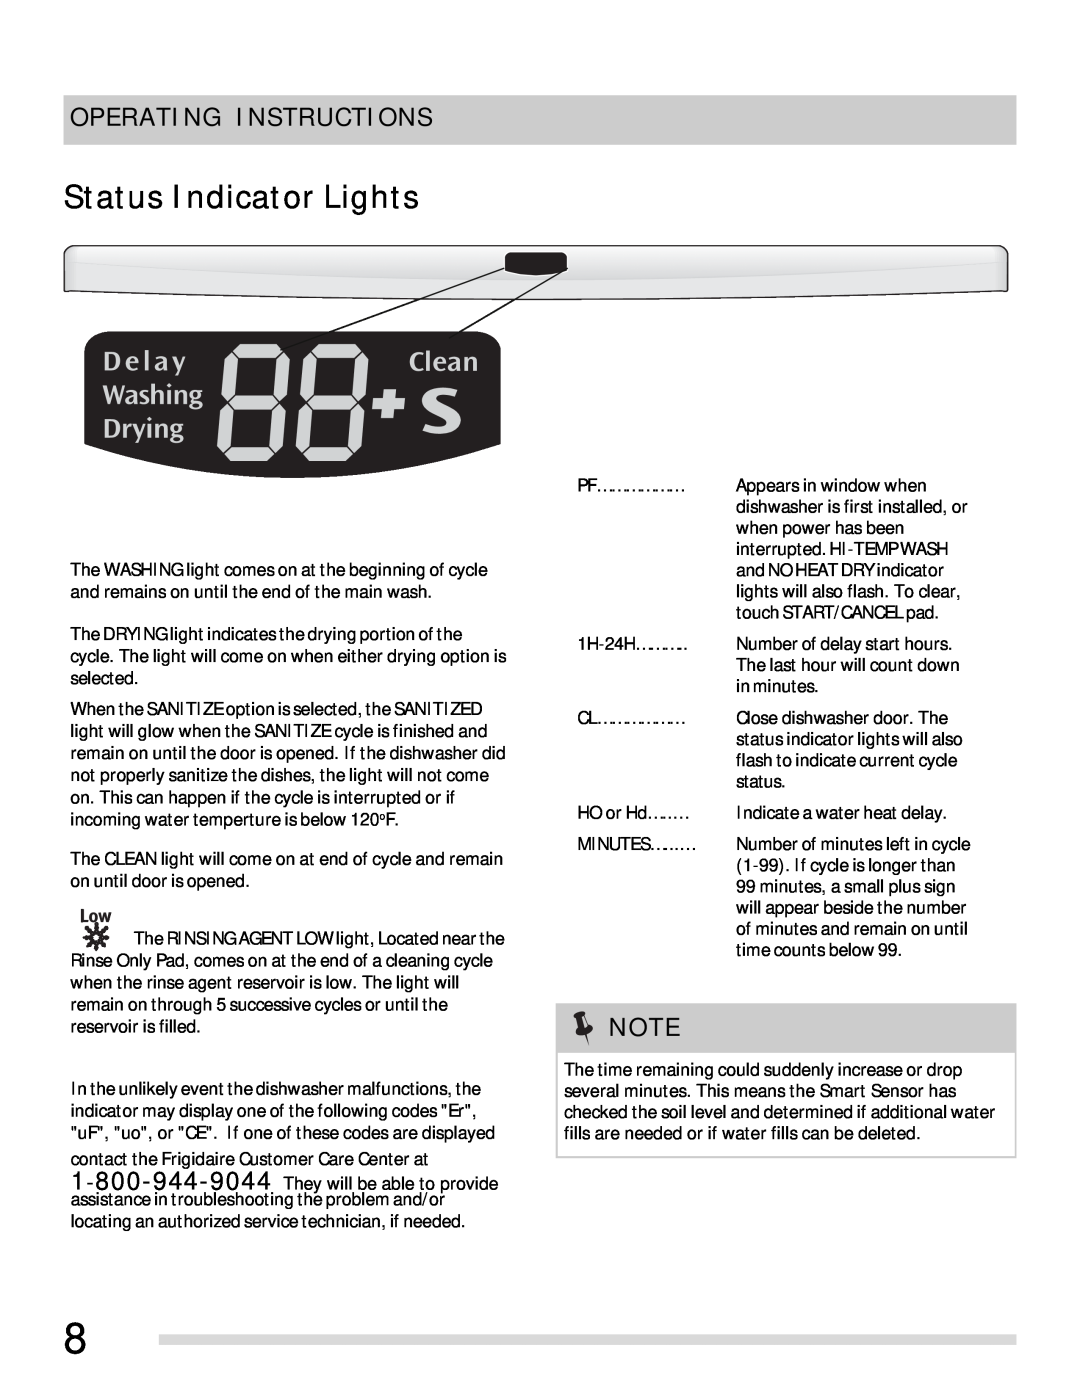 Frigidaire 154768701 important safety instructions Status Indicator Lights, Operating Instructions 